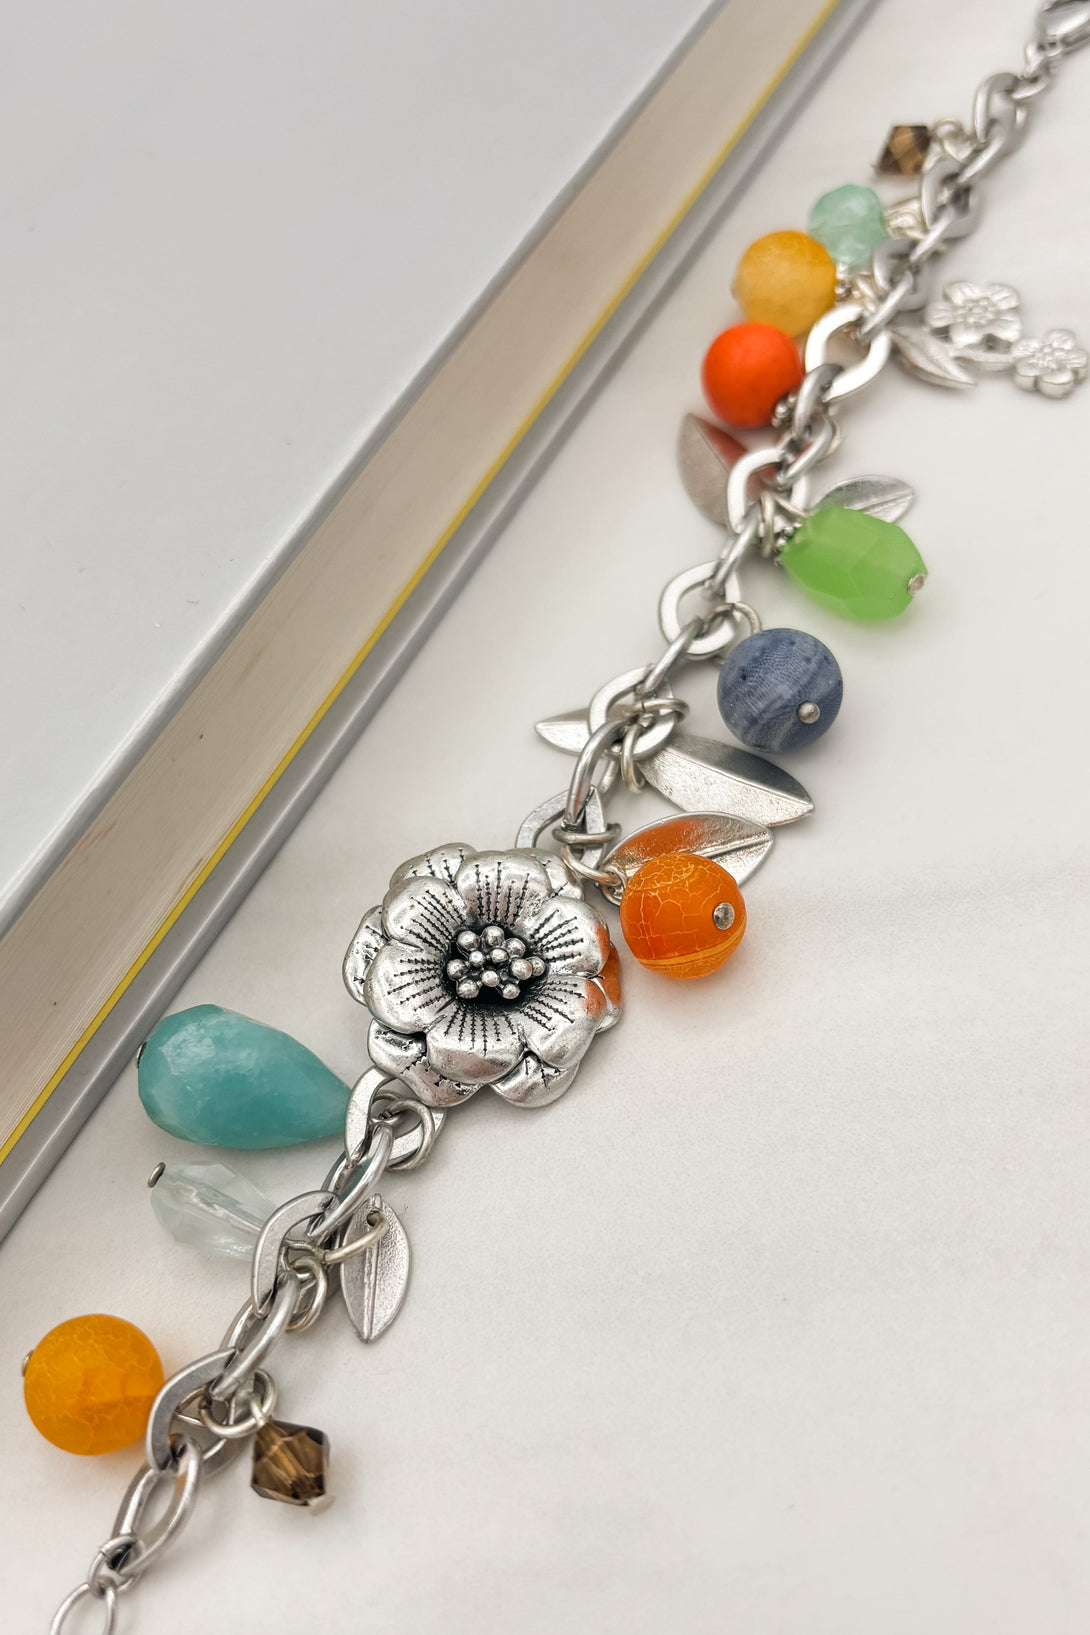 Citrus Grove Charm Bracelet with Genuine Stone Beads